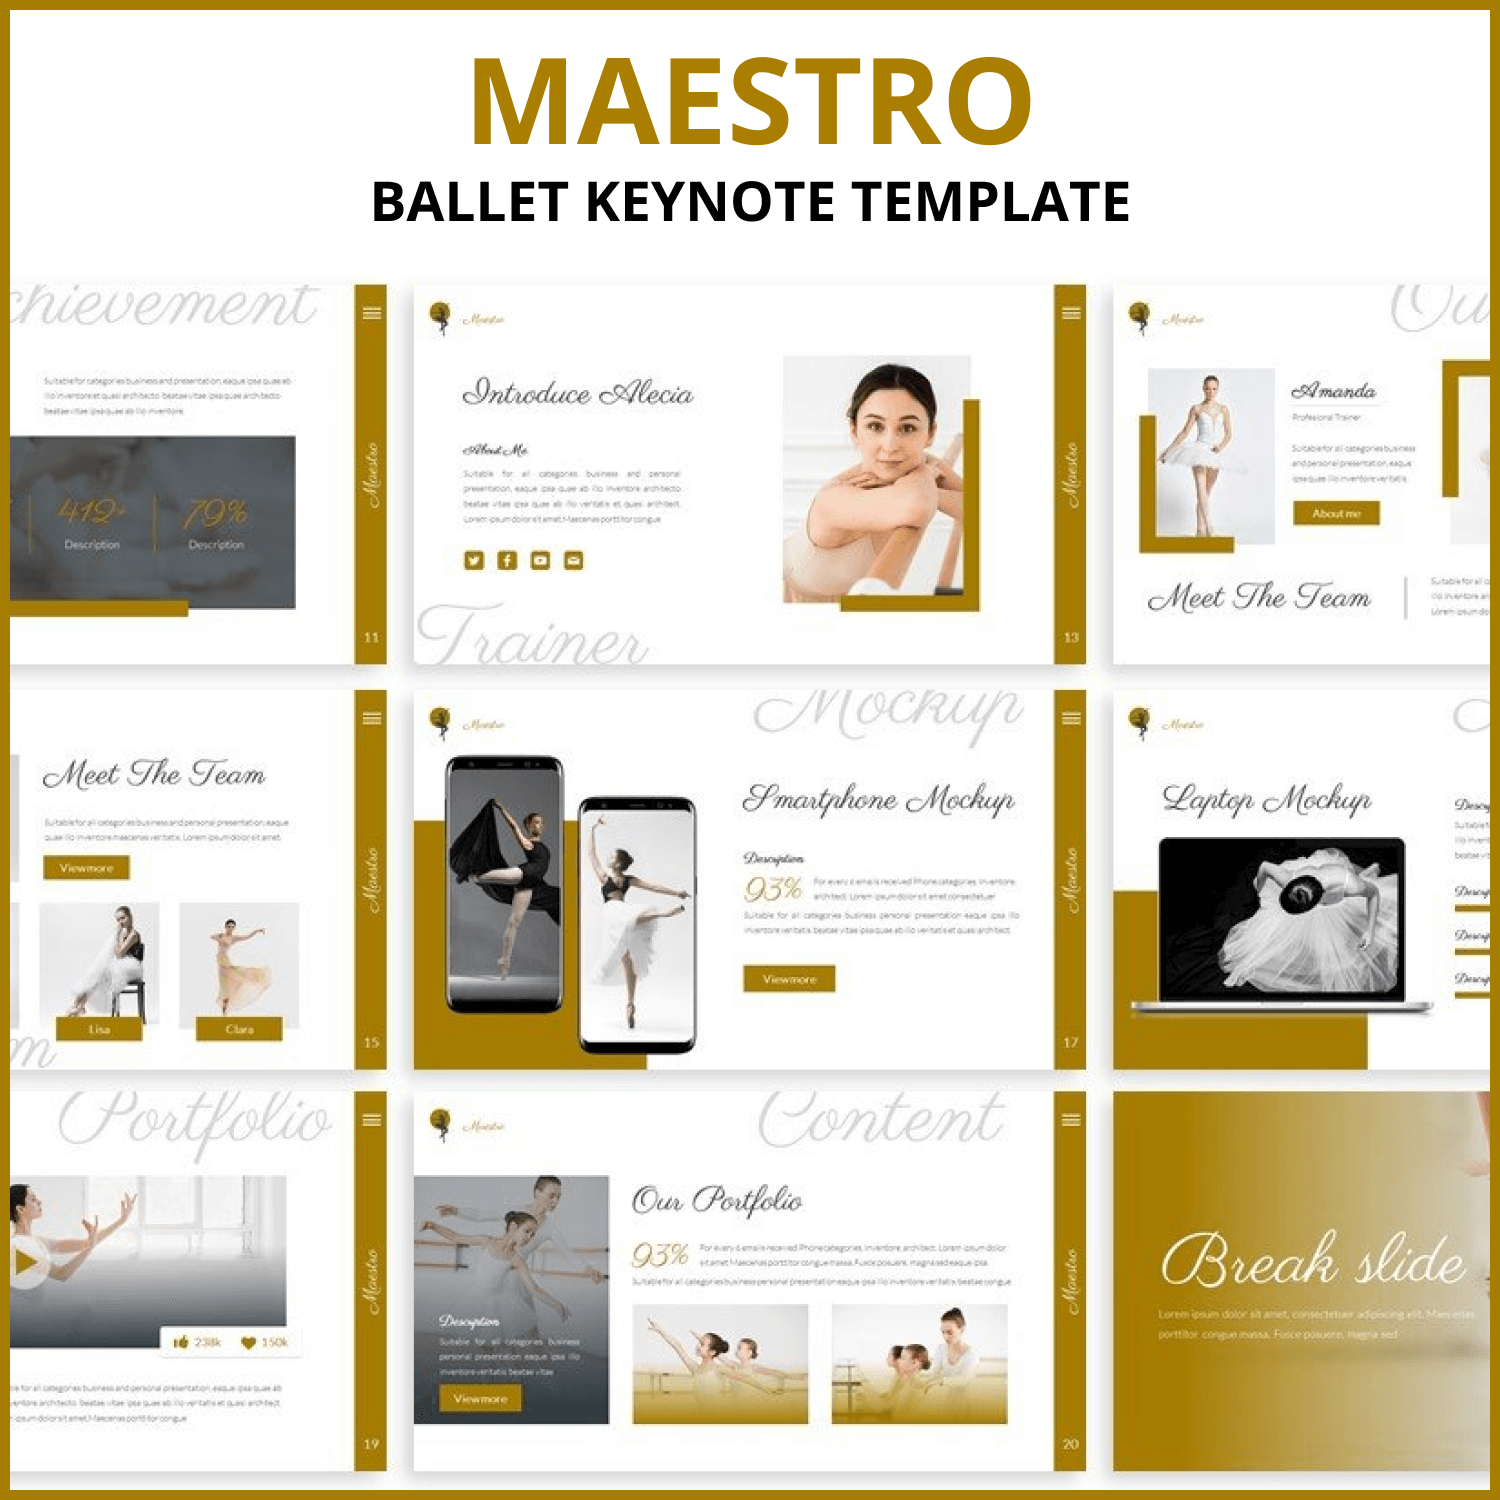 Maestro ballet keynote template.